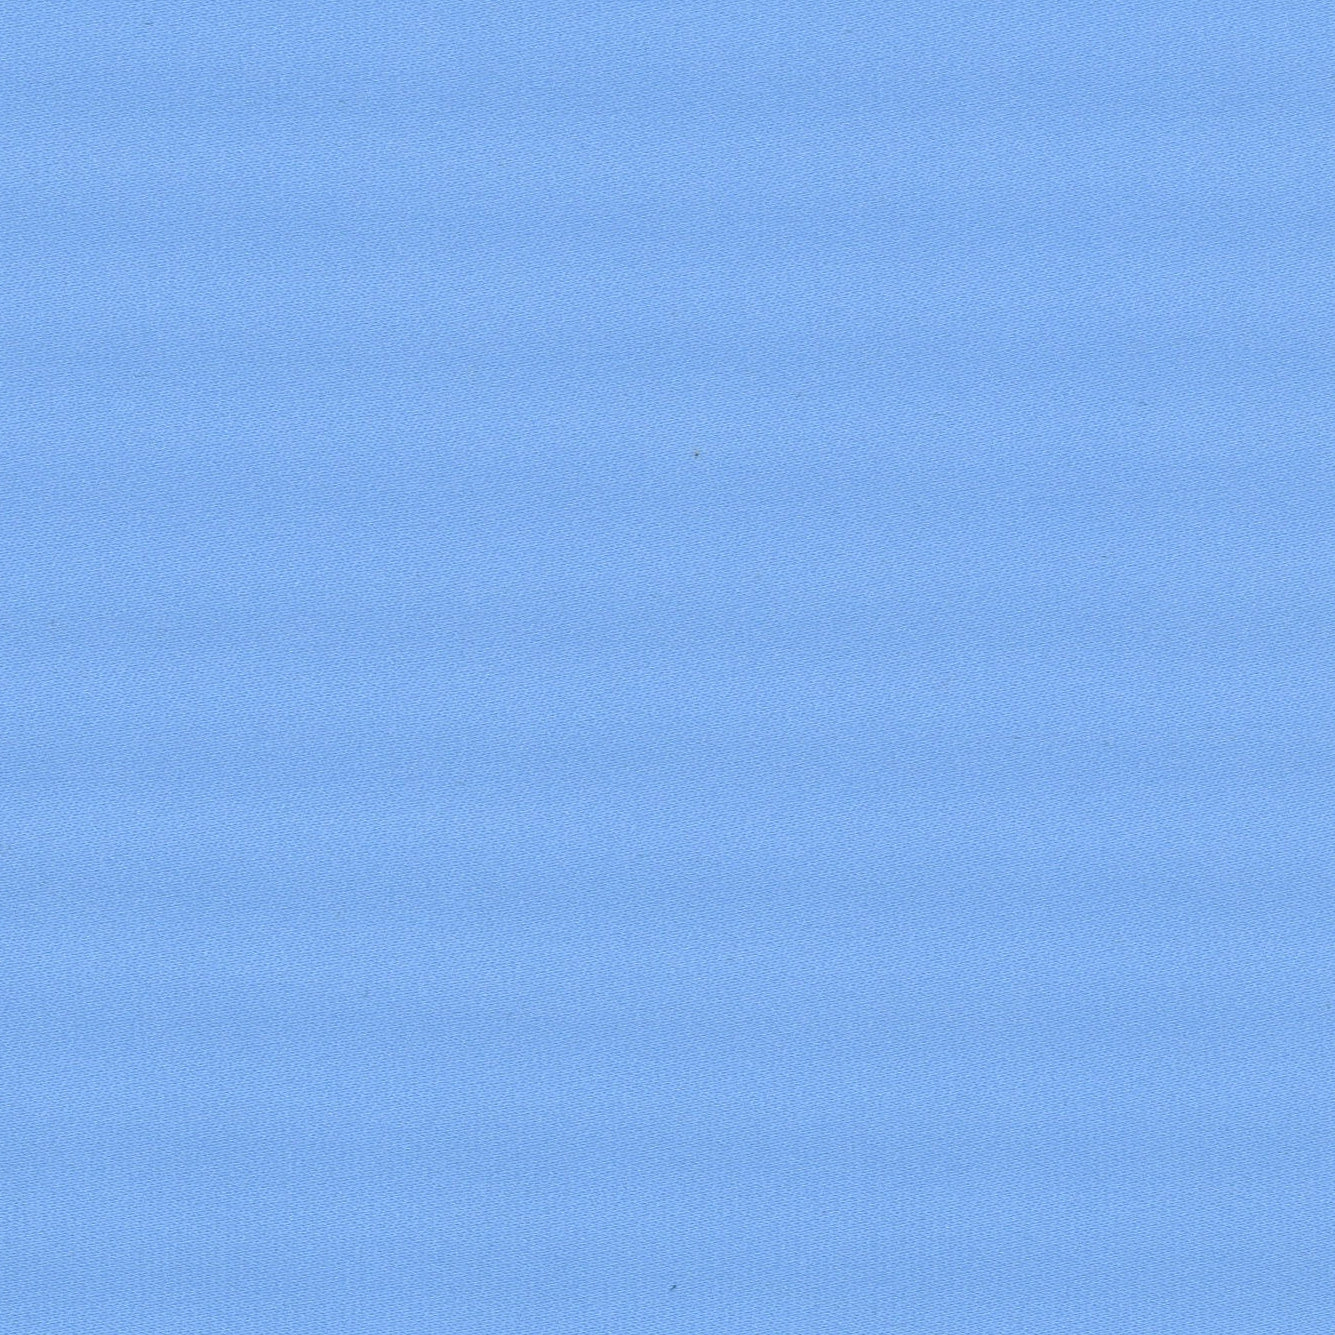 36033-10 Light Blue Polyester Plain Dyed 233g/yd 56&quot; blue plain dyed polyester woven Solid Color - knit fabric - woven fabric - fabric company - fabric wholesale - fabric b2b - fabric factory - high quality fabric - hong kong fabric - fabric hk - acetate fabric - cotton fabric - linen fabric - metallic fabric - nylon fabric - polyester fabric - spandex fabric - chun wing hing - cwh hk - fabric worldwide ship - 針織布 - 梳織布 - 布料公司- 布料批發 - 香港布料 - 秦榮興